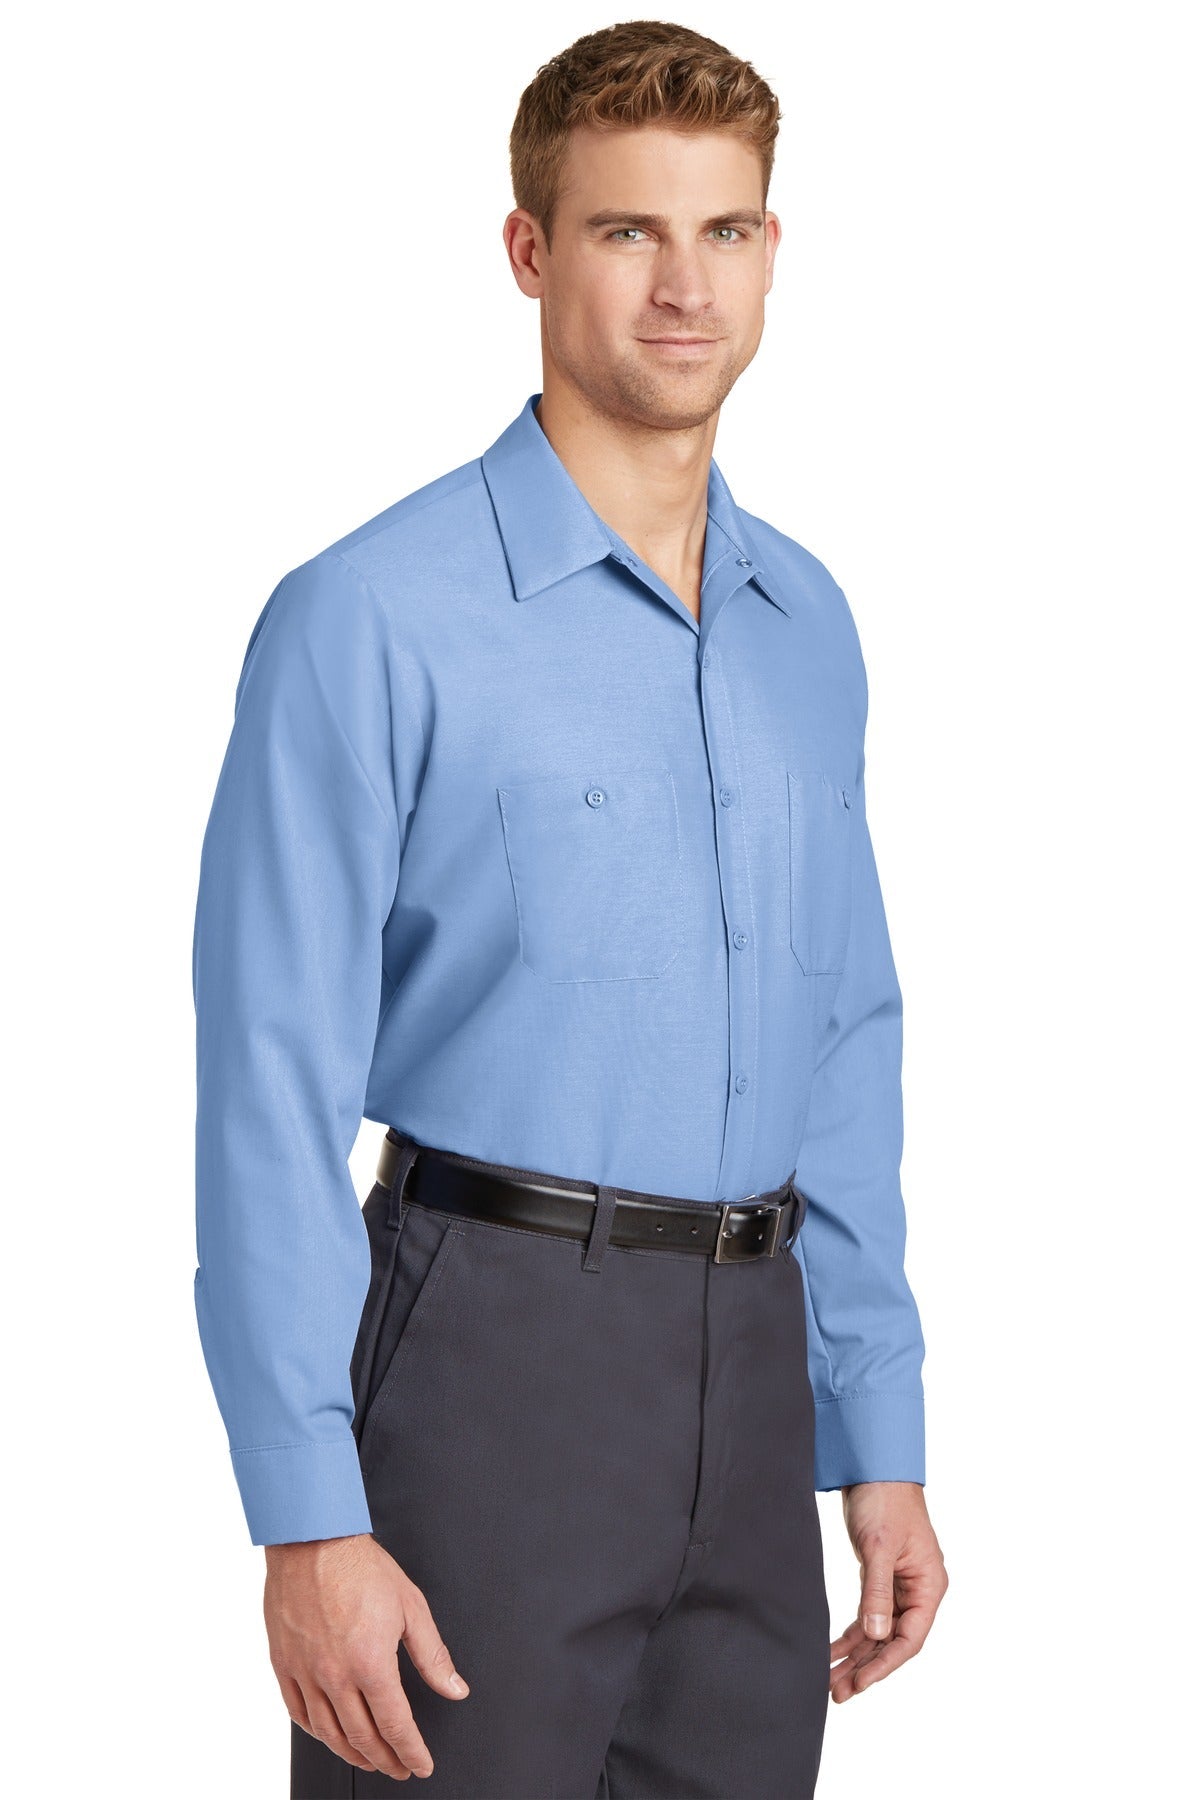 Red Kap Long Sleeve Industrial Work Shirt. SP14 - BT Imprintables Shirts